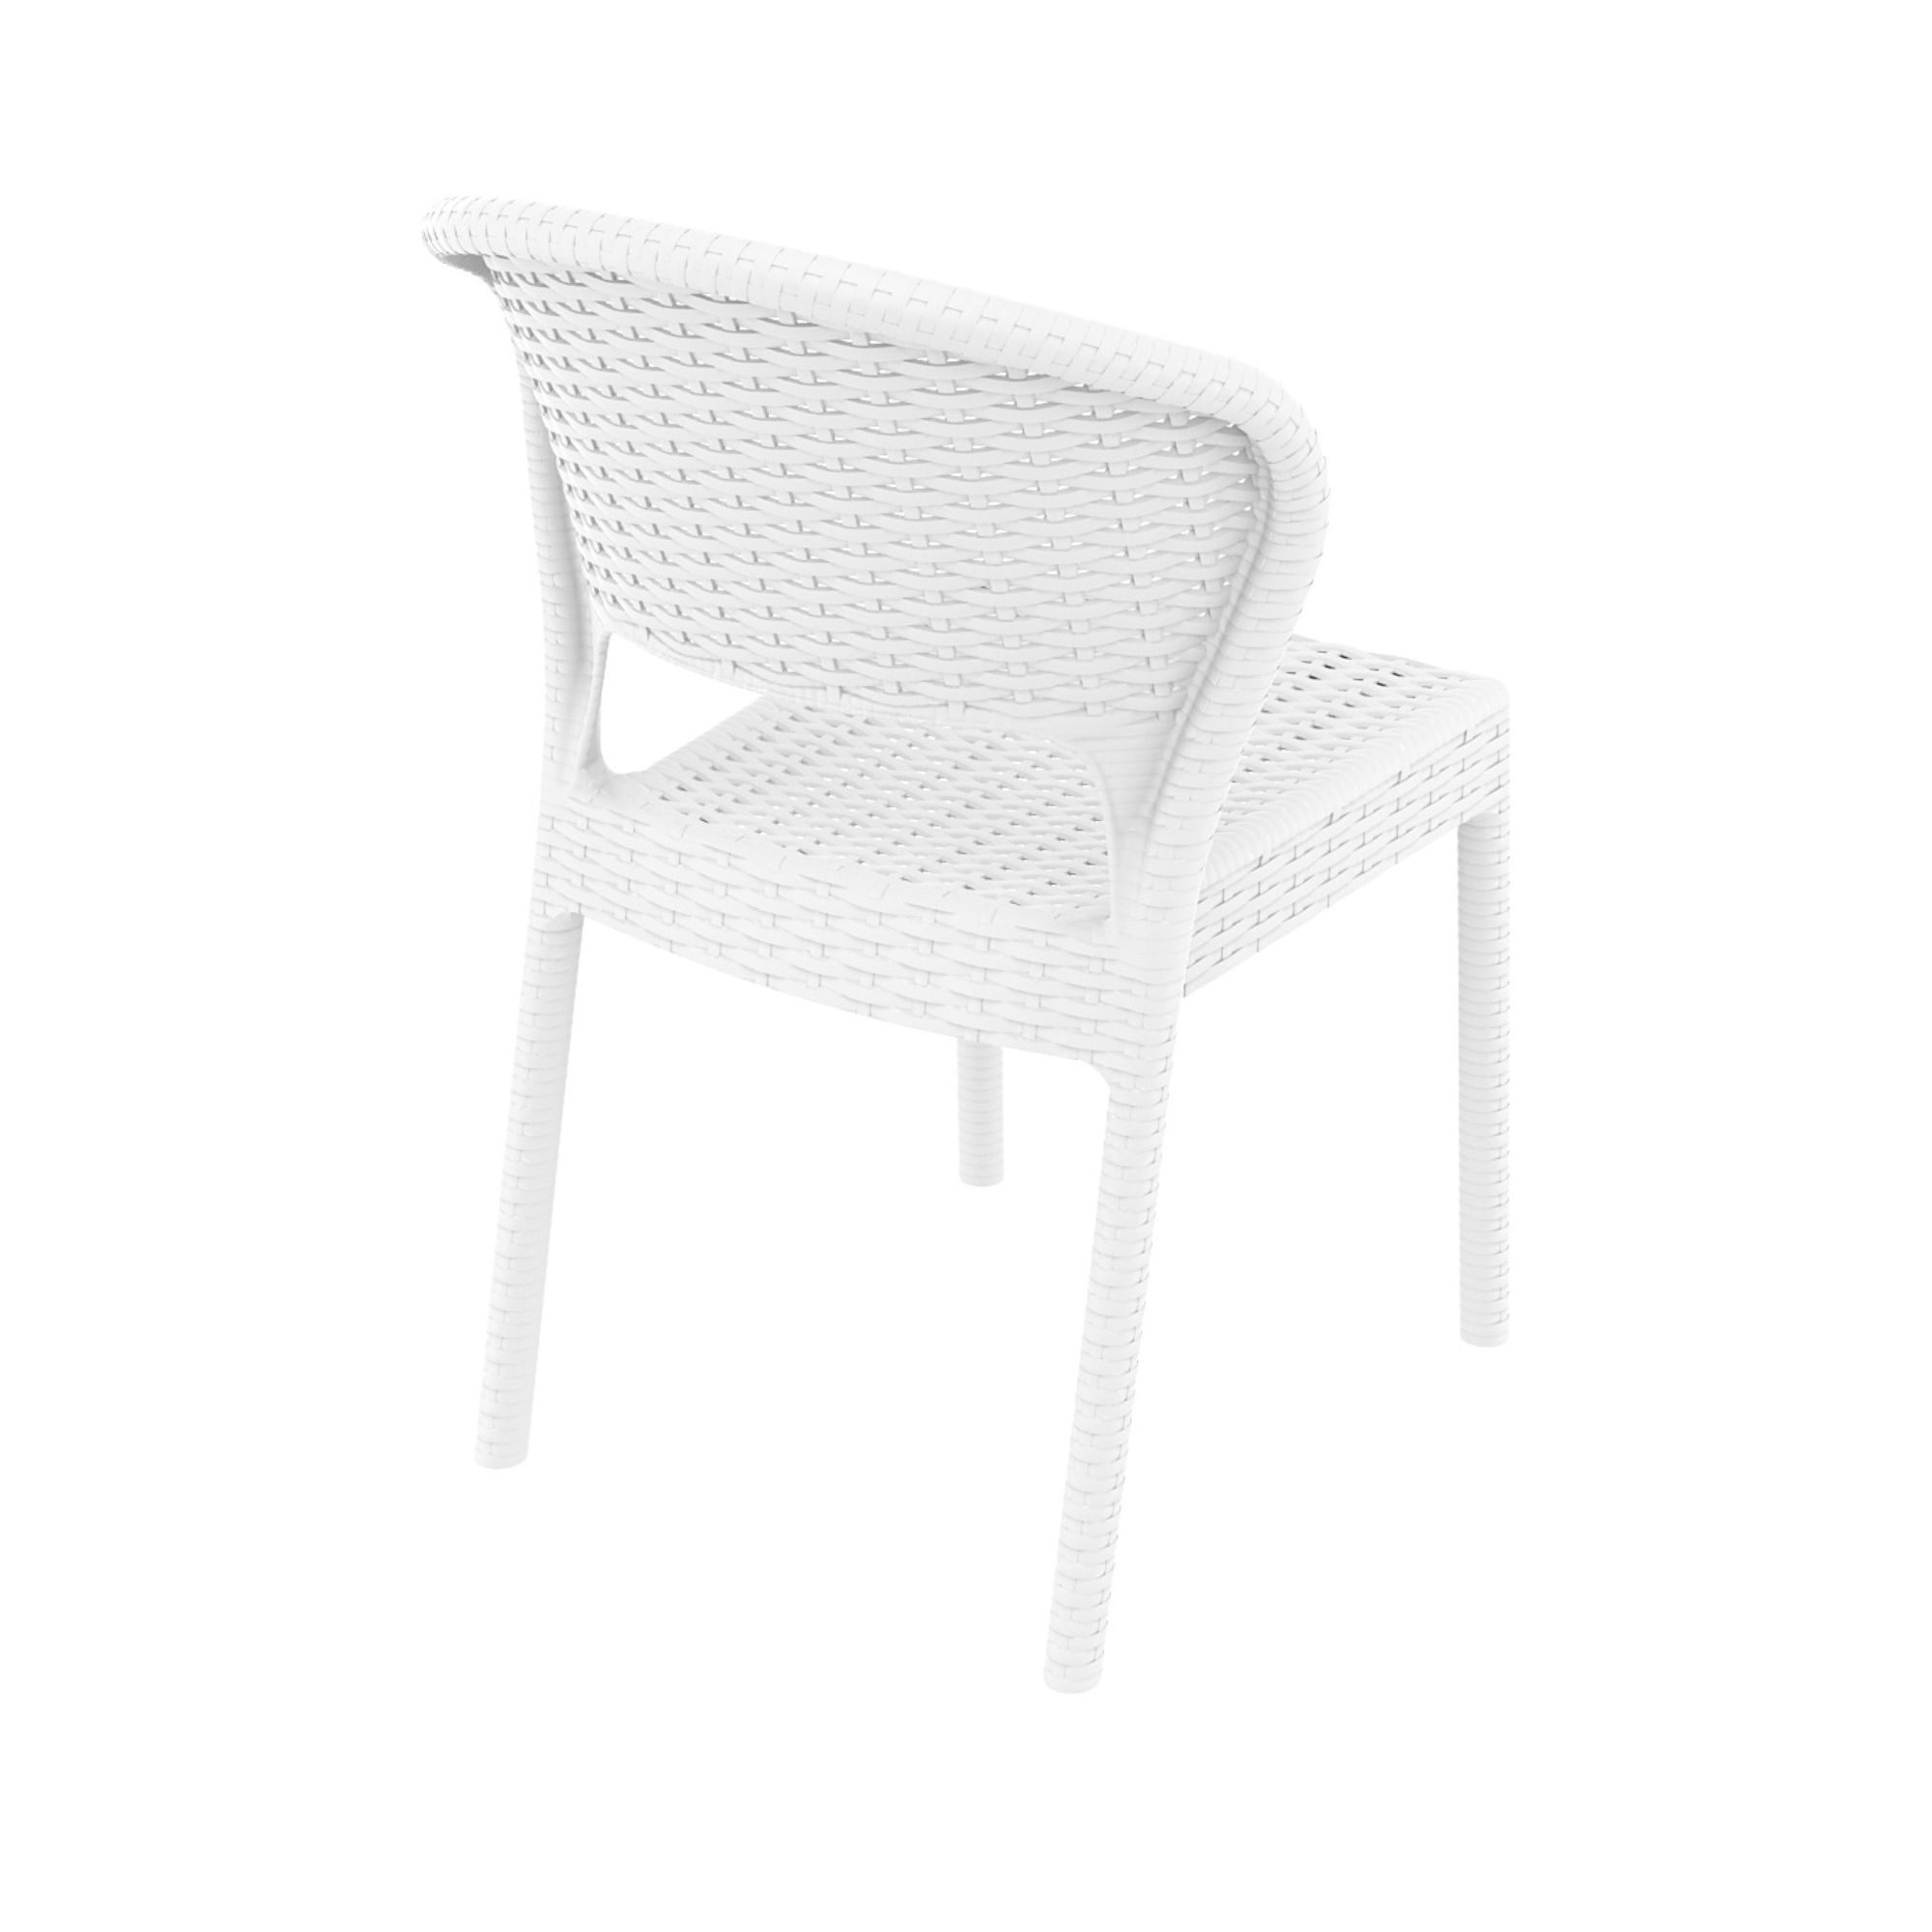 Siesta Daytona Resin Wickerlook Set of 2 Dining Chair White ISP818-WH - image 2 of 9